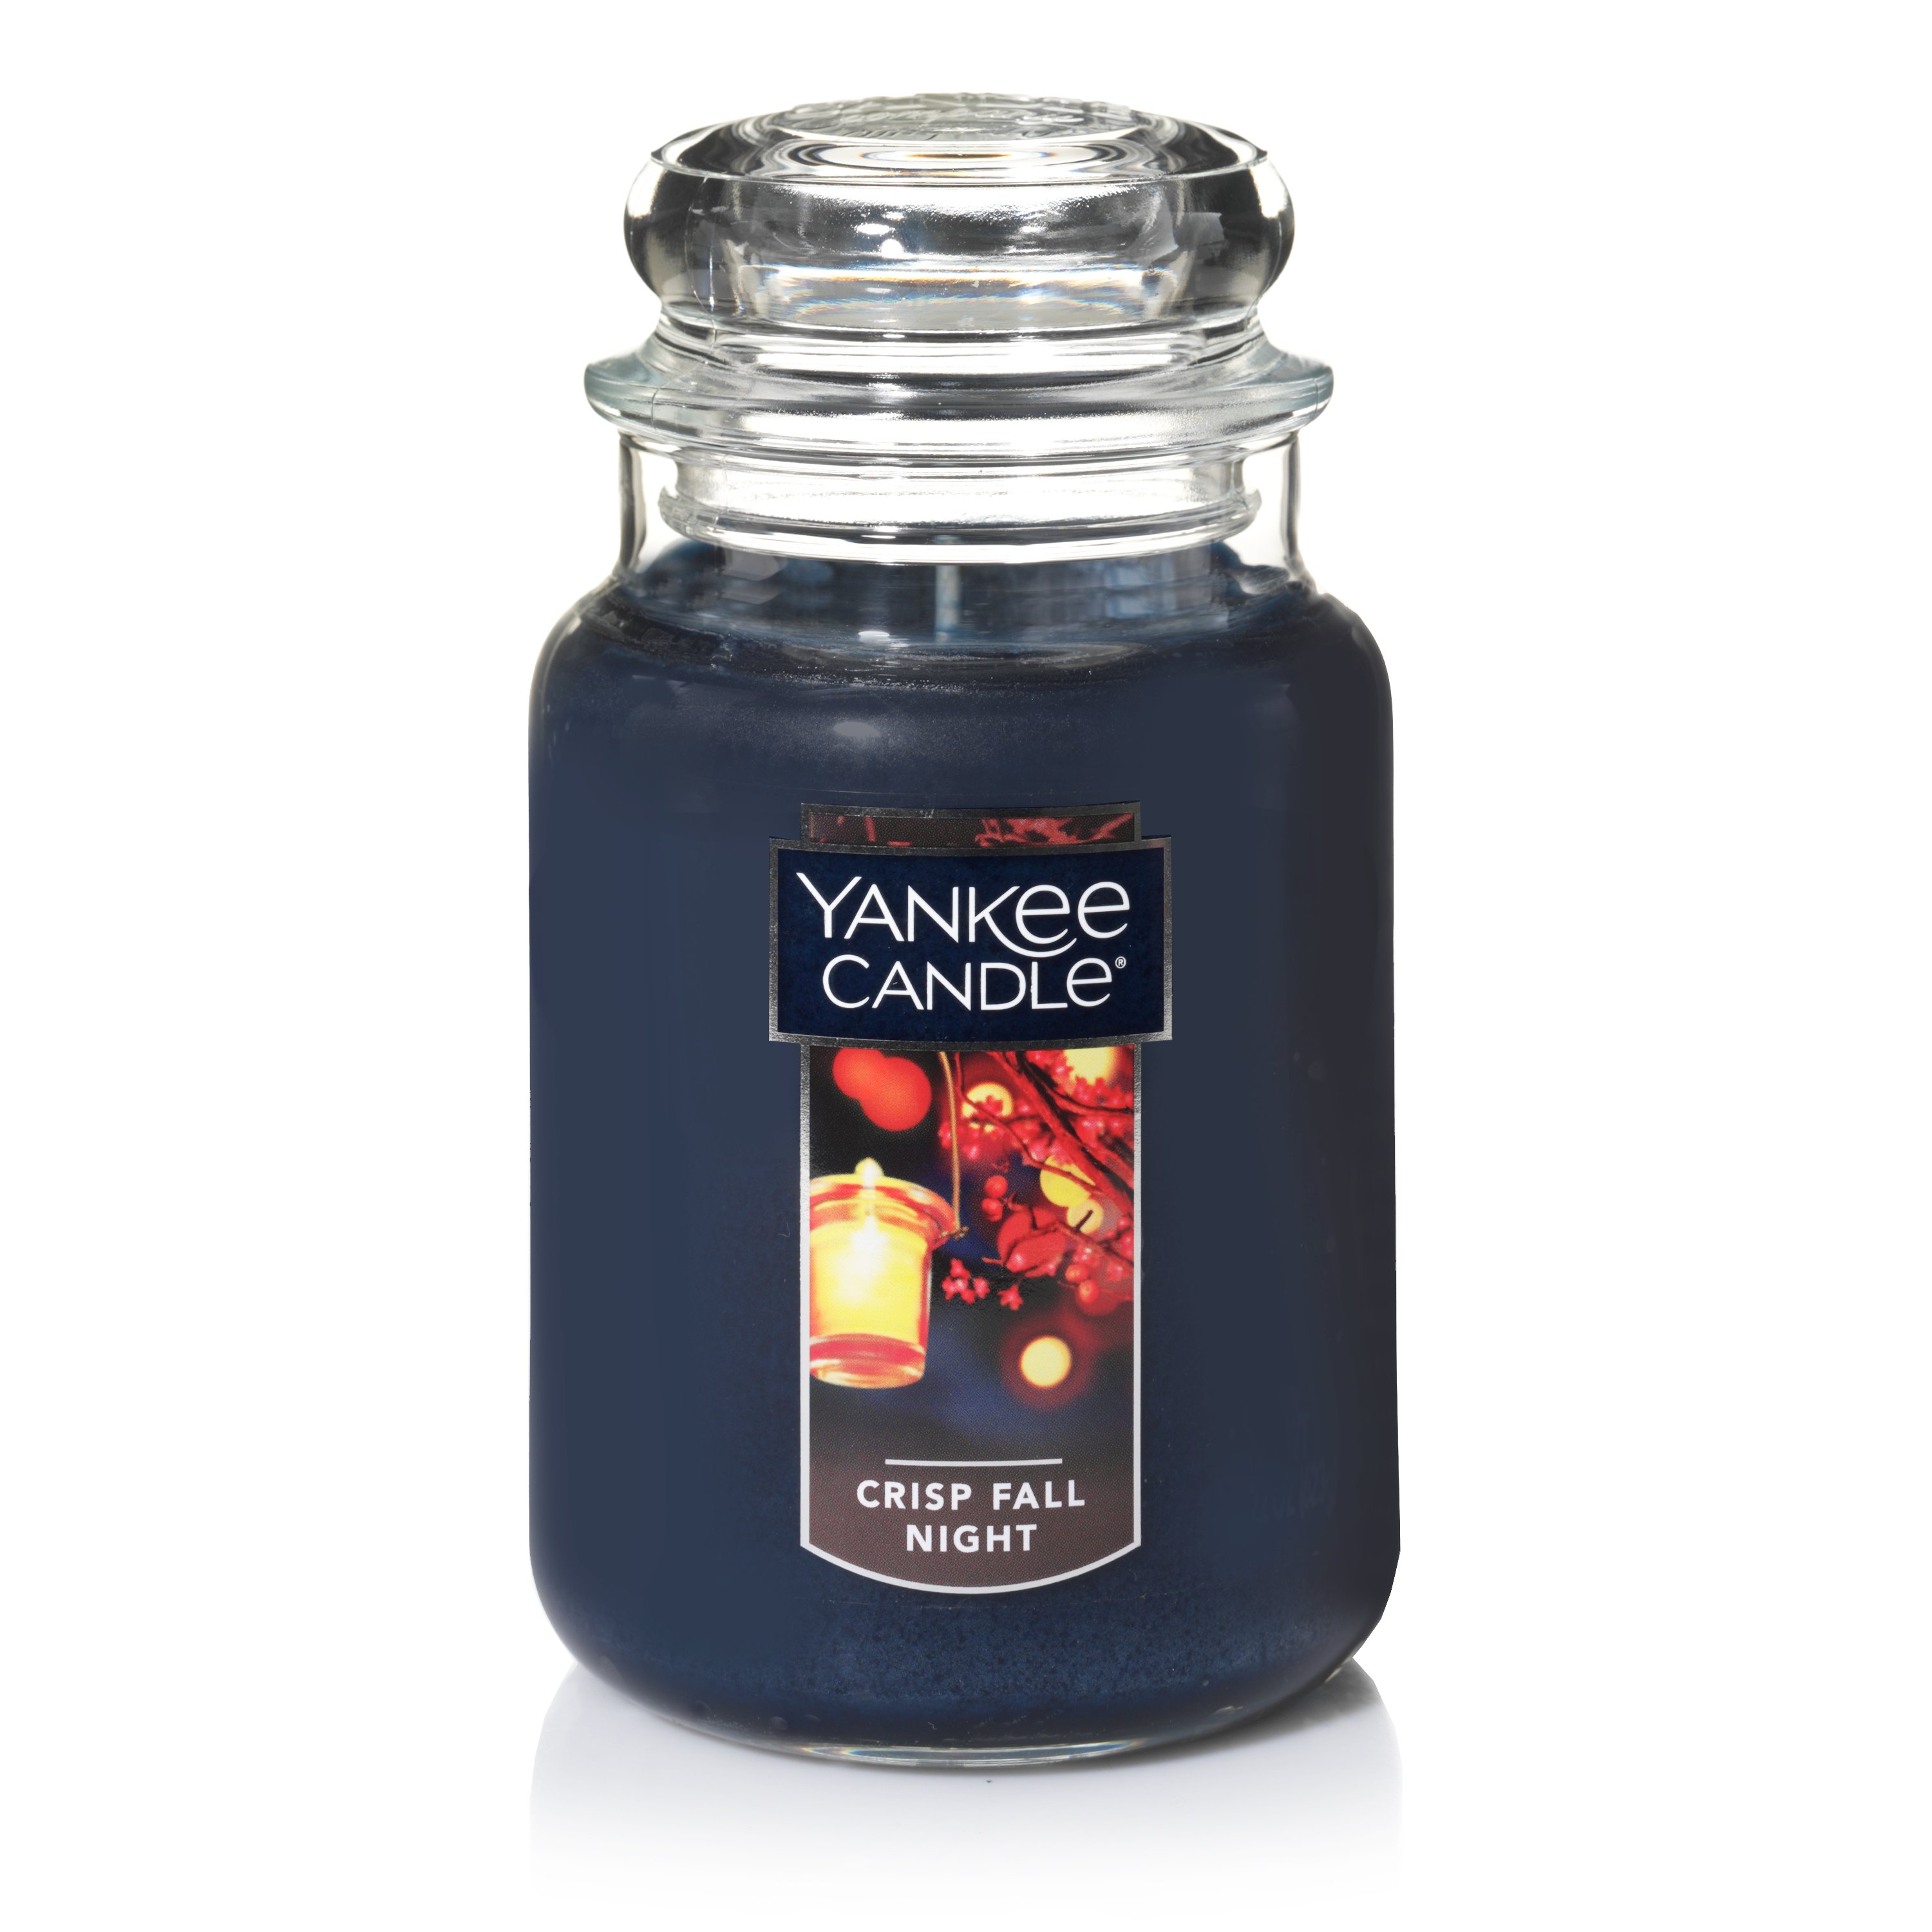 Favourite Yankee Candles for Autumn/Winter ♥ - Class & Glitter